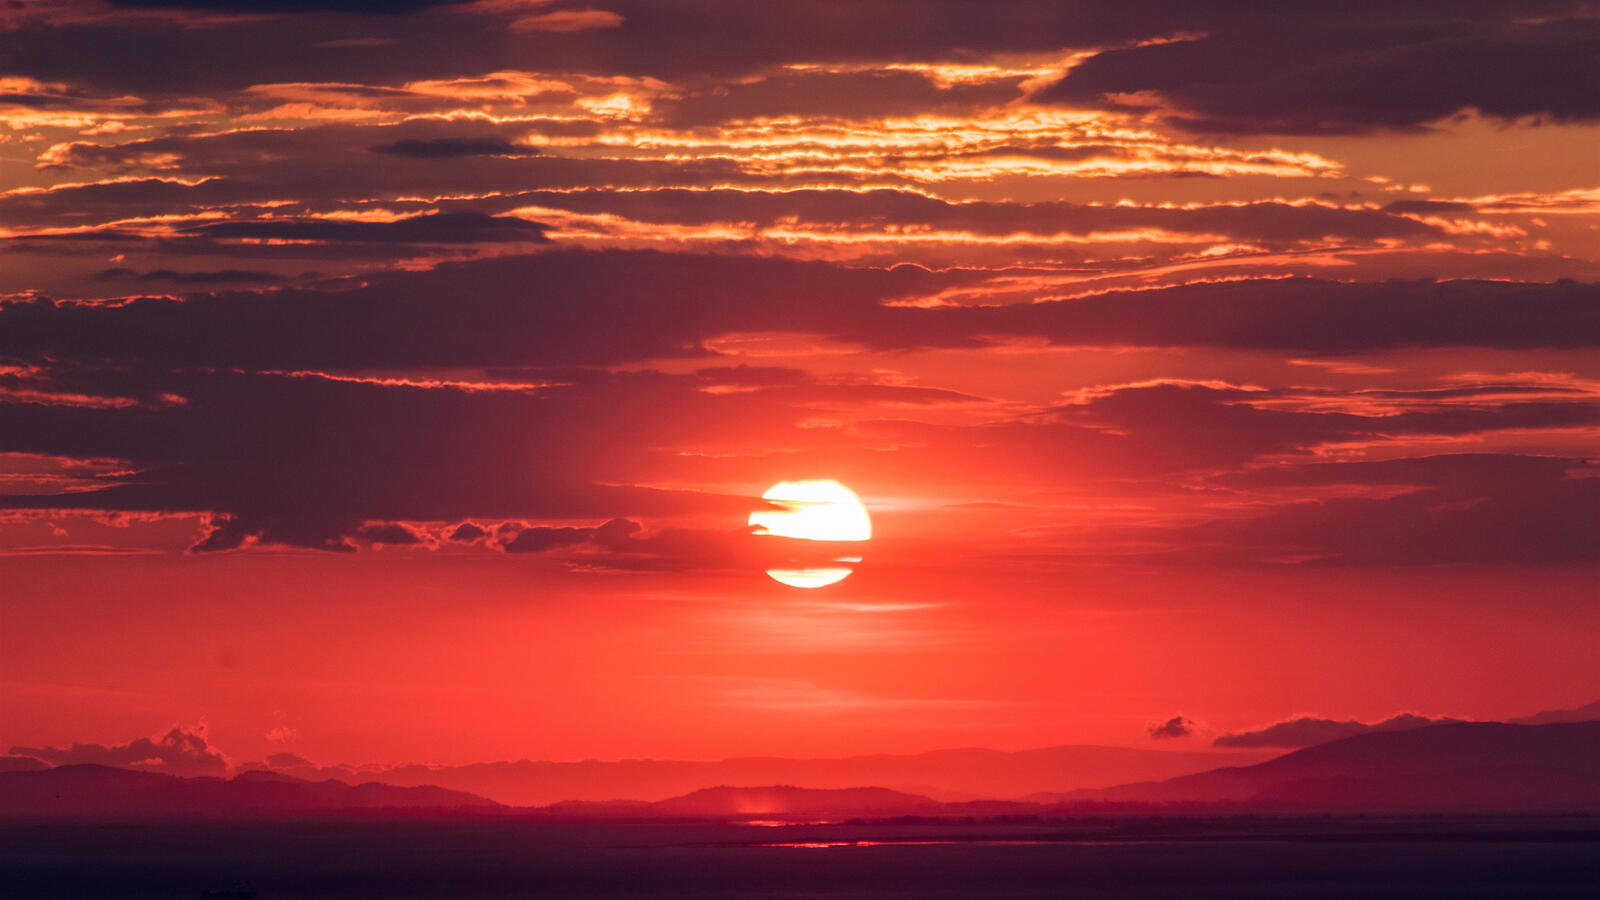 Бесплатное фото Красное солнце на облачном небе